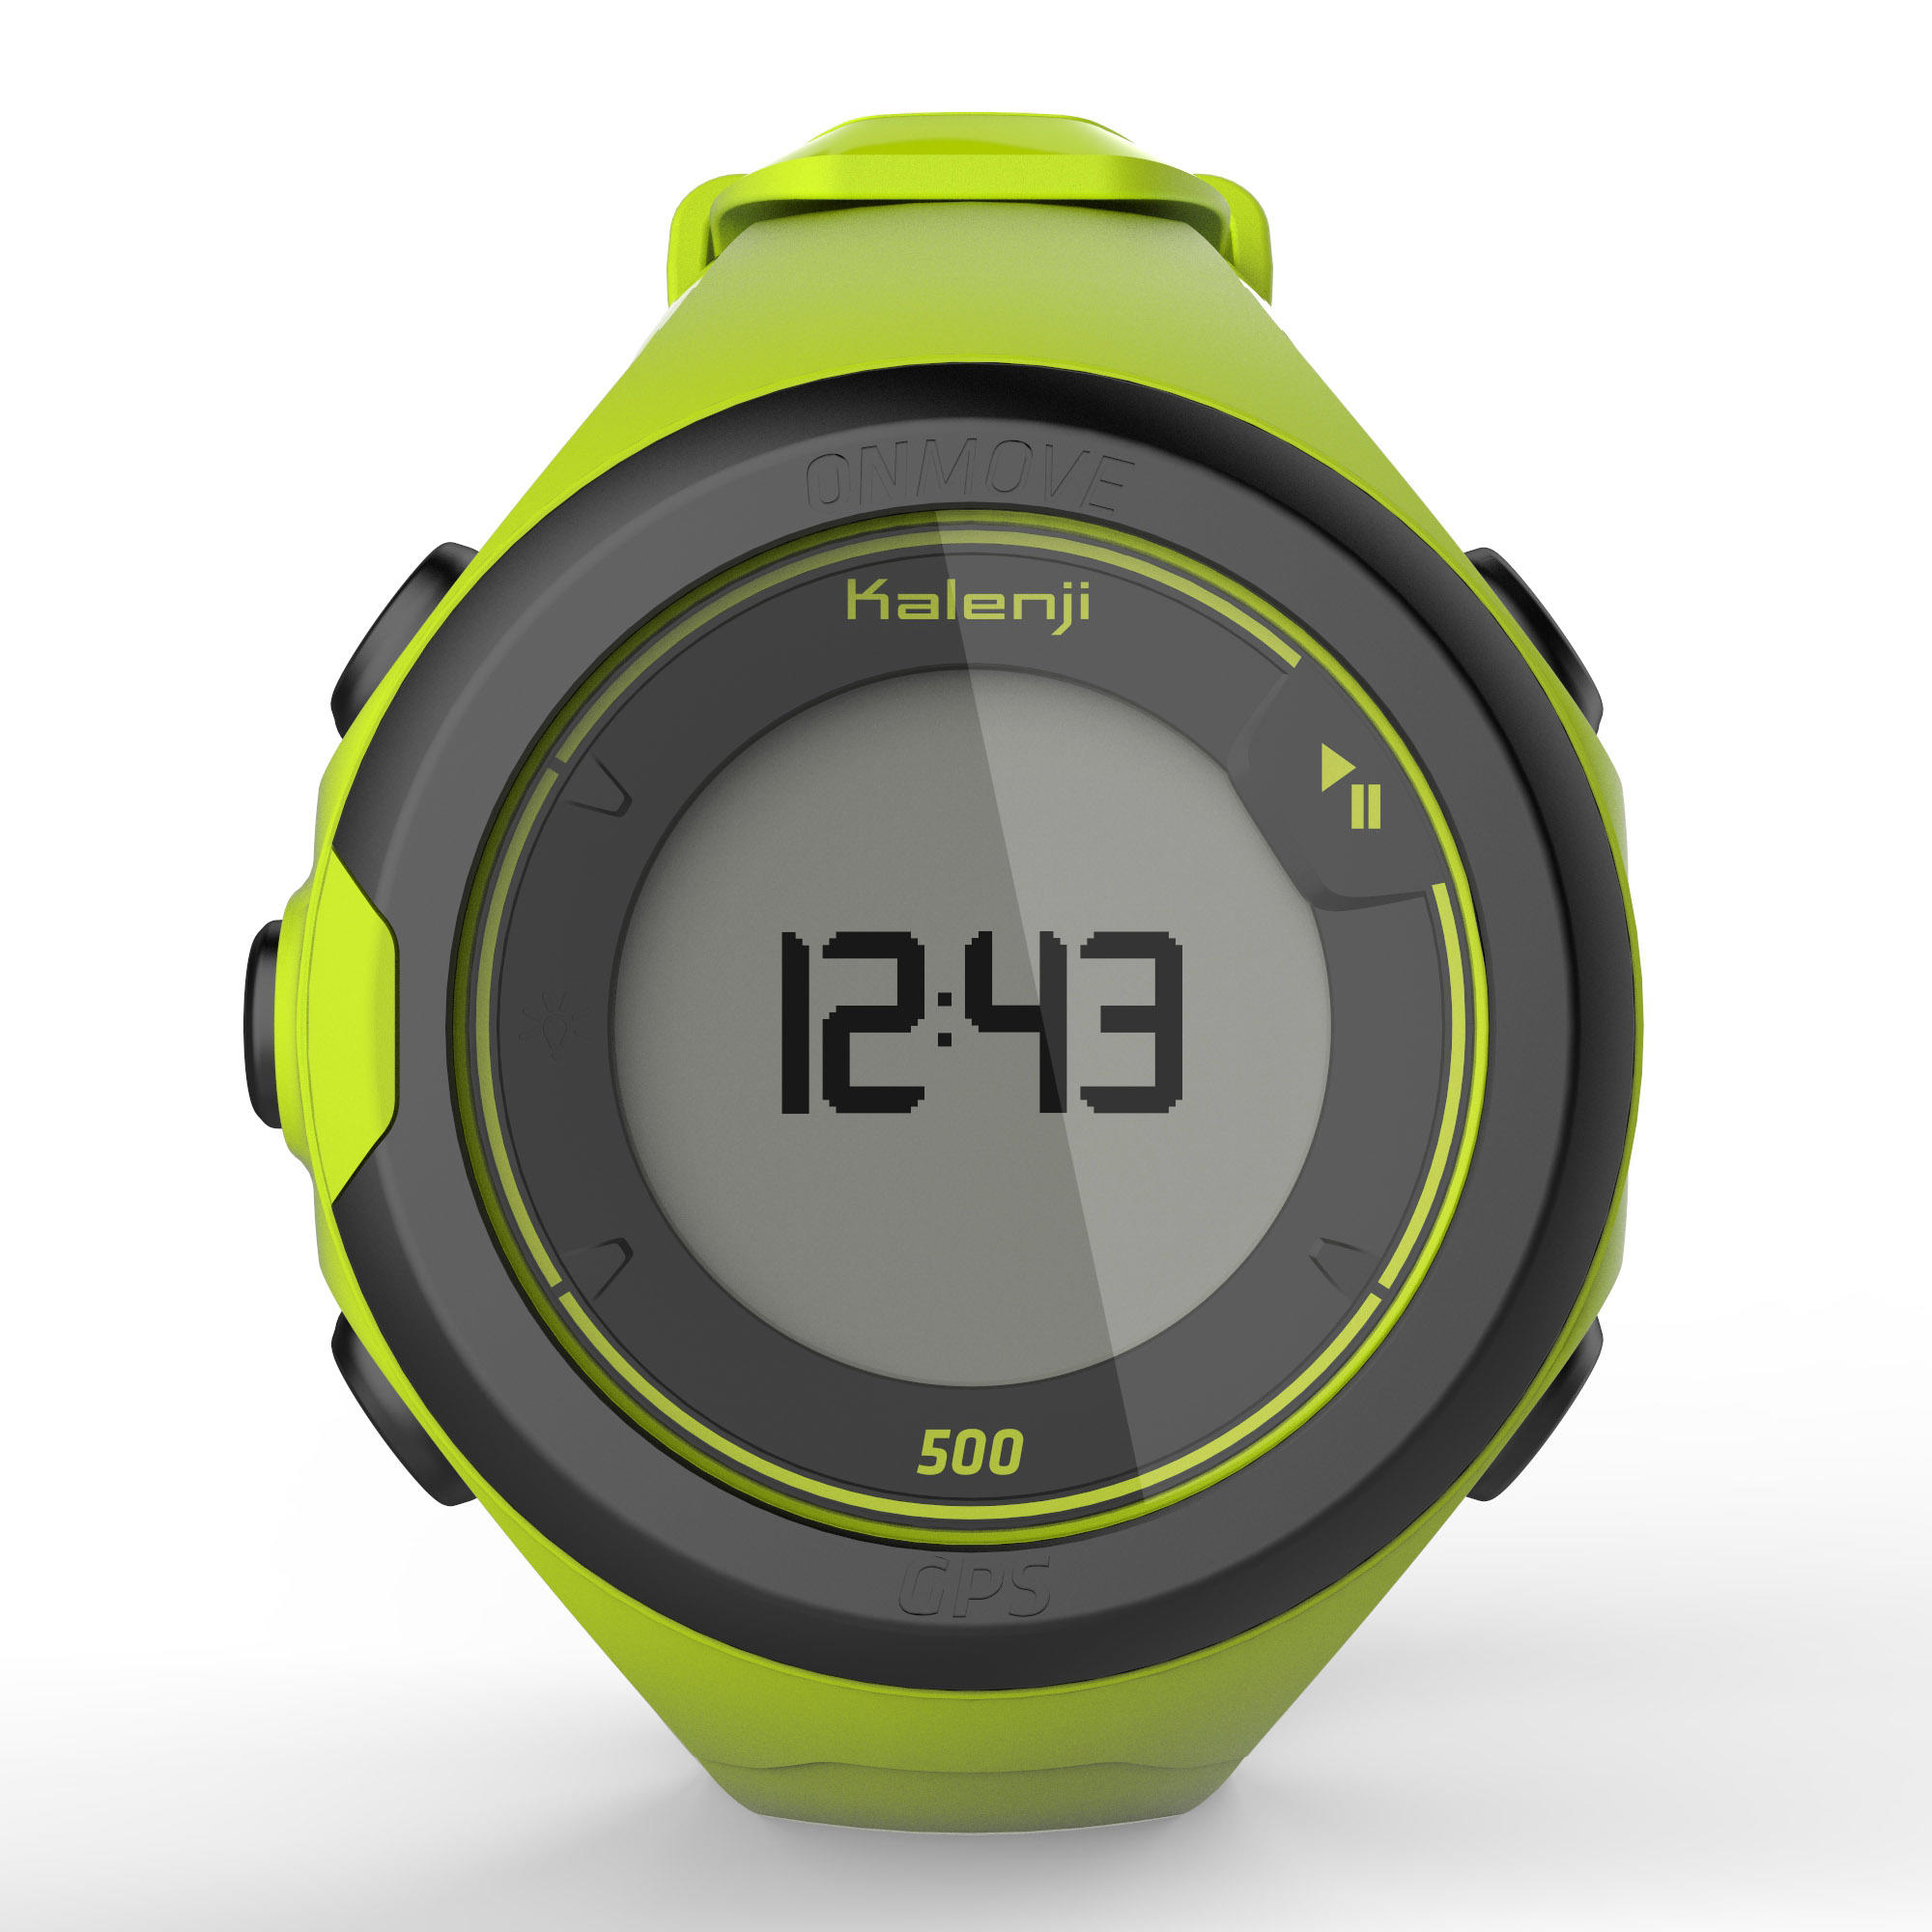 ONmove 500 GPS running watch and wrist heart rate monitor - yellow 6/17